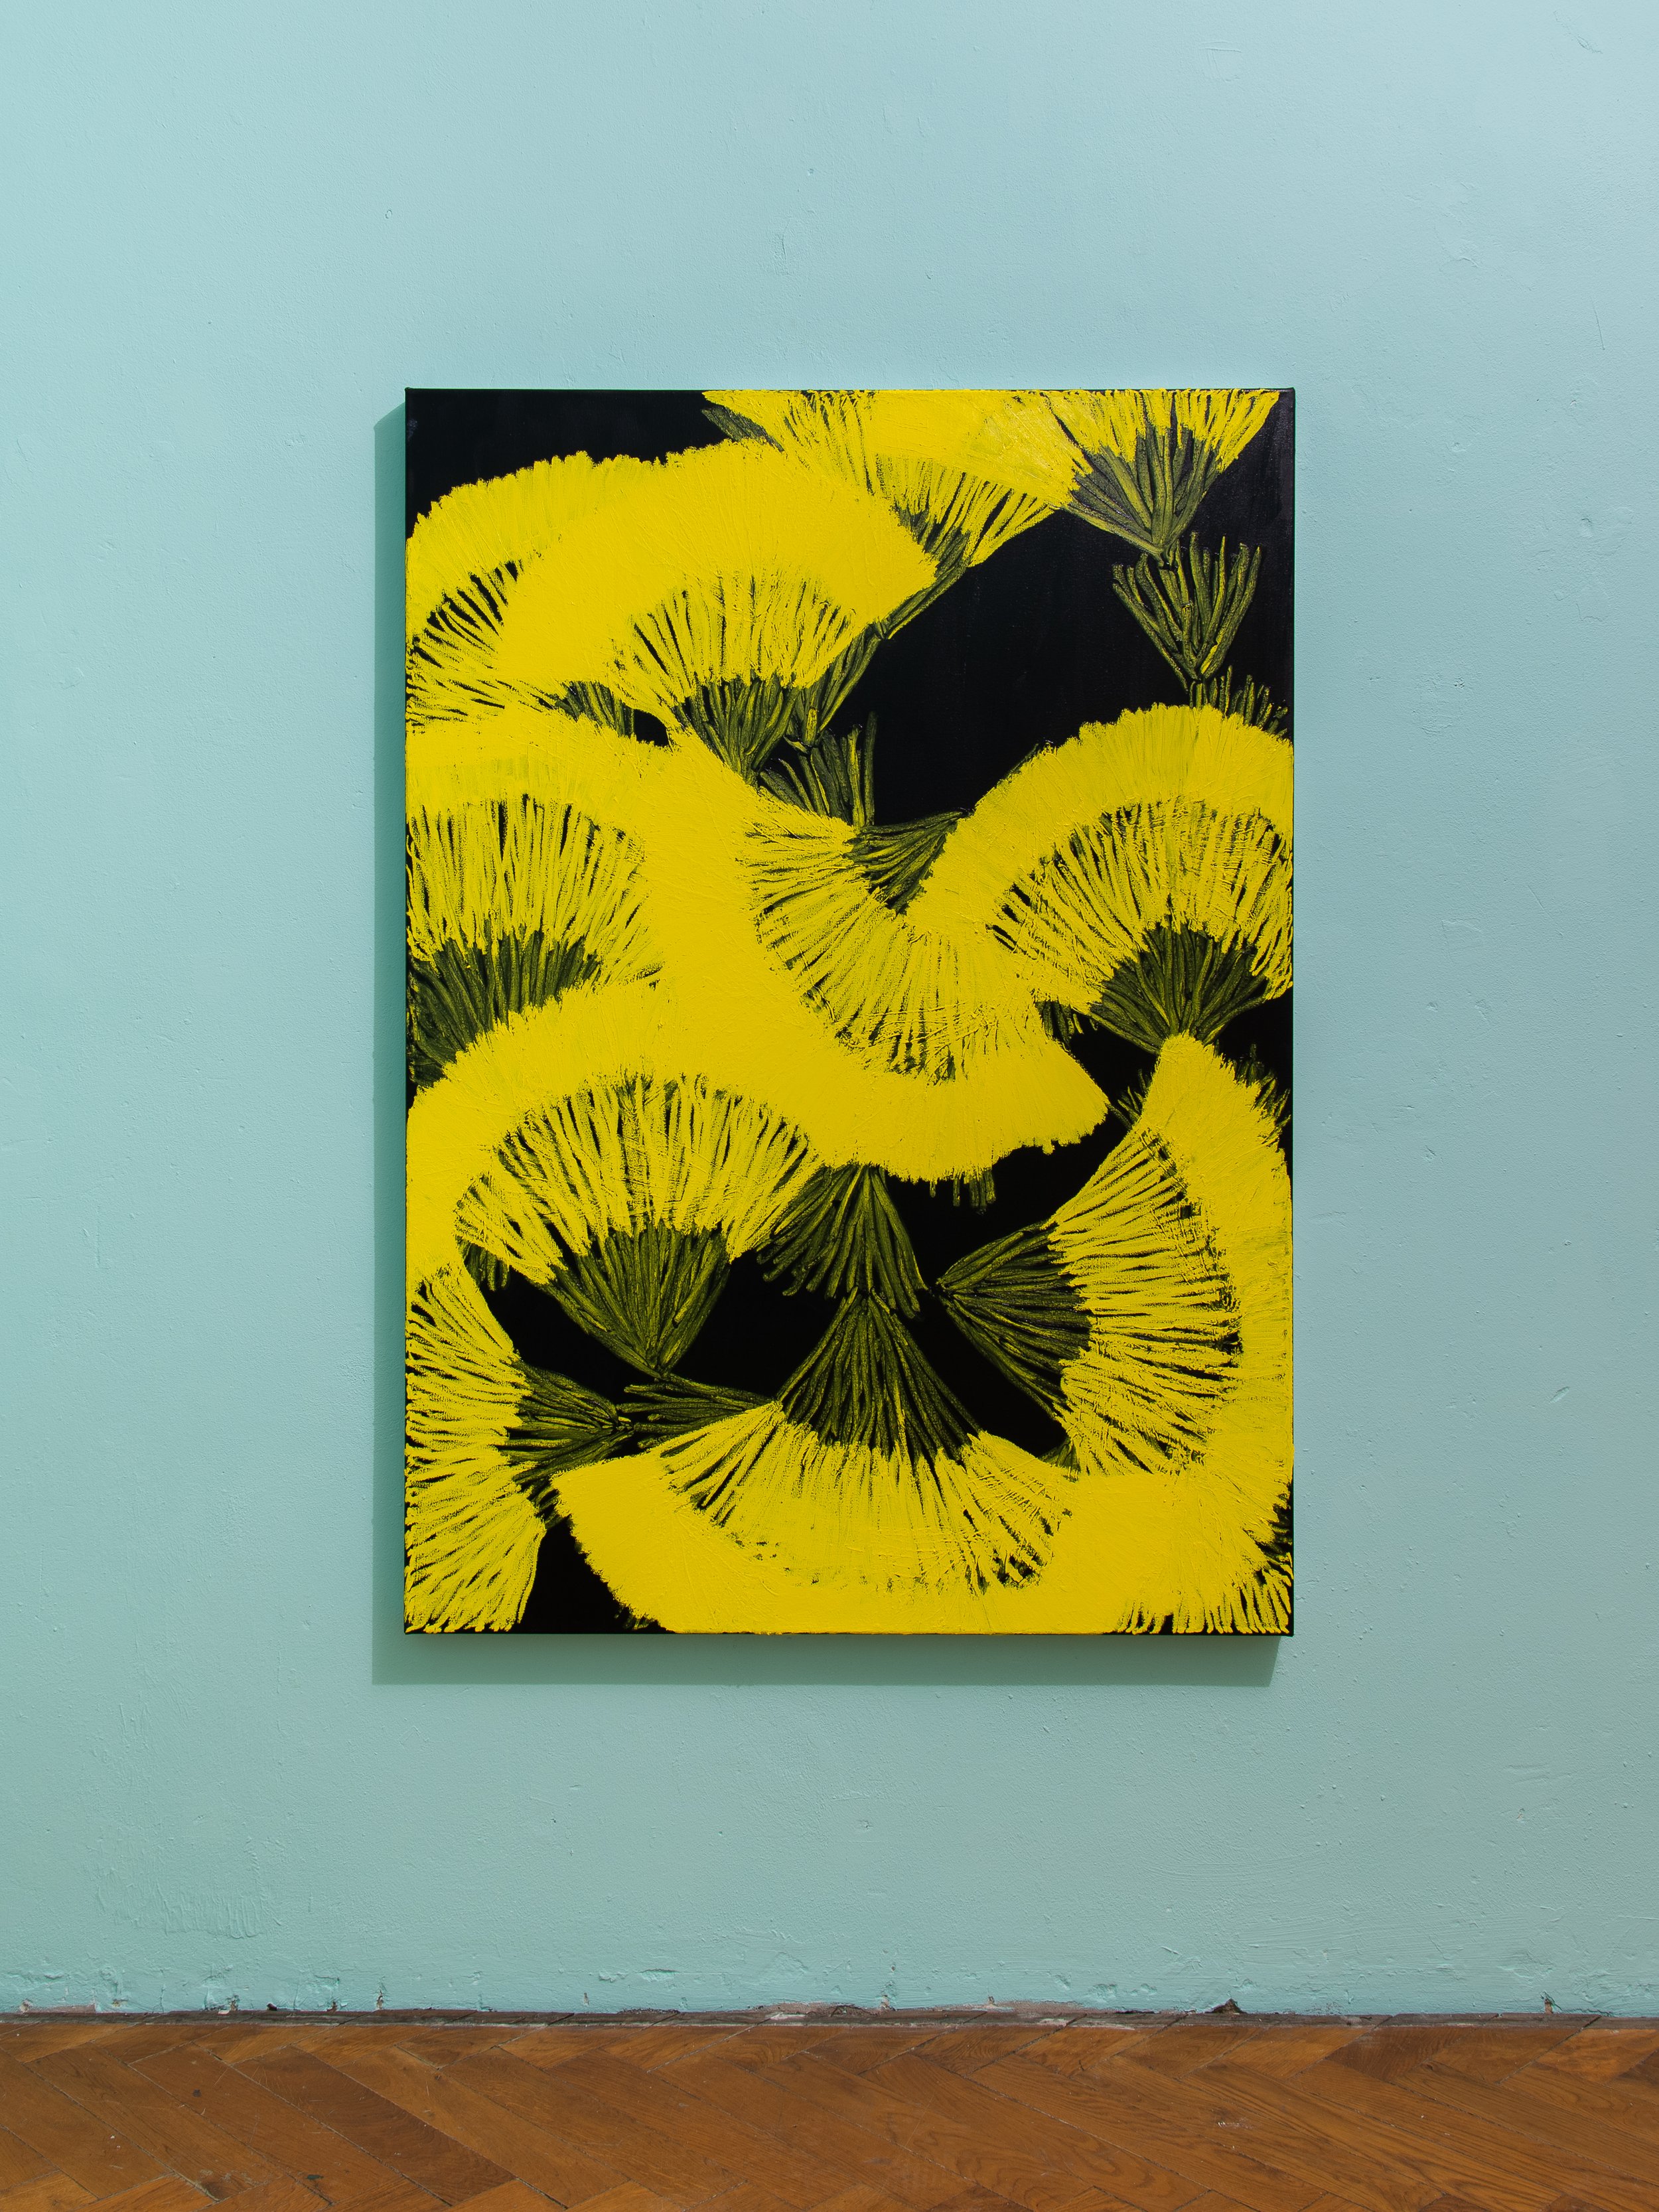  Gabija Vidrinskaitė, “Dandelion”  140 × 100 cm, Oil on Canvas, 2022 